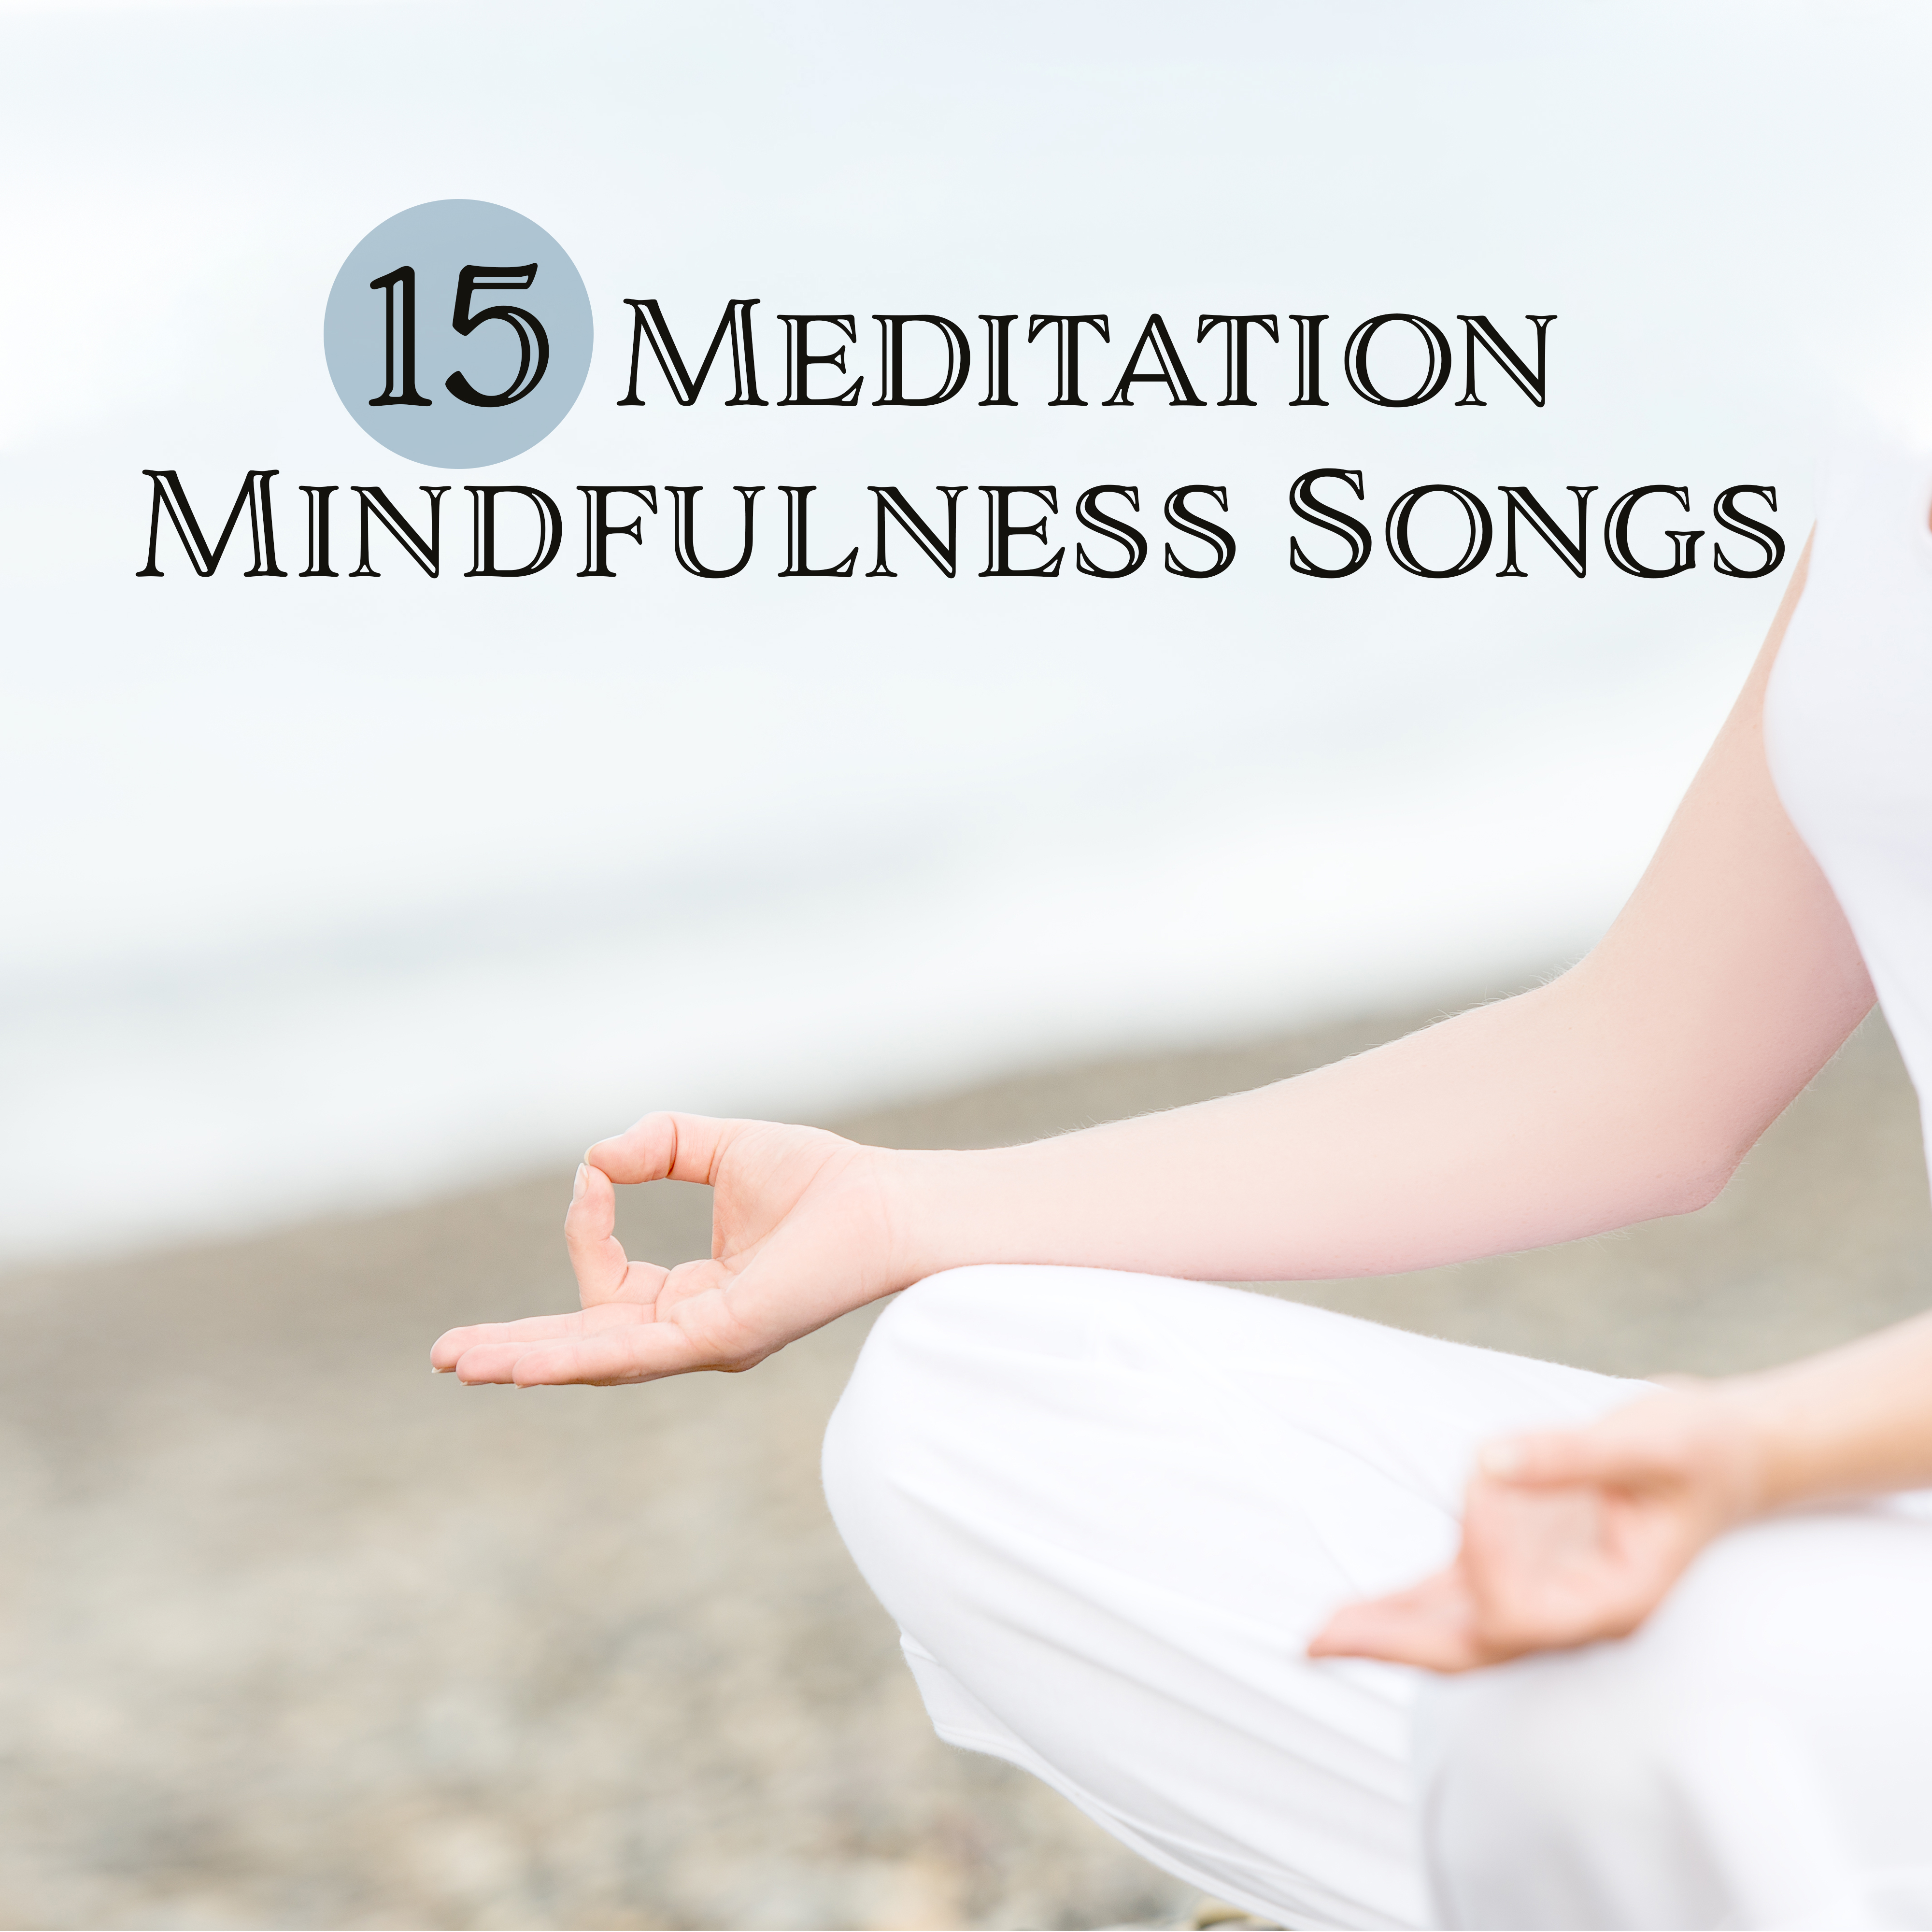 15 Meditation Mindfulness Songs